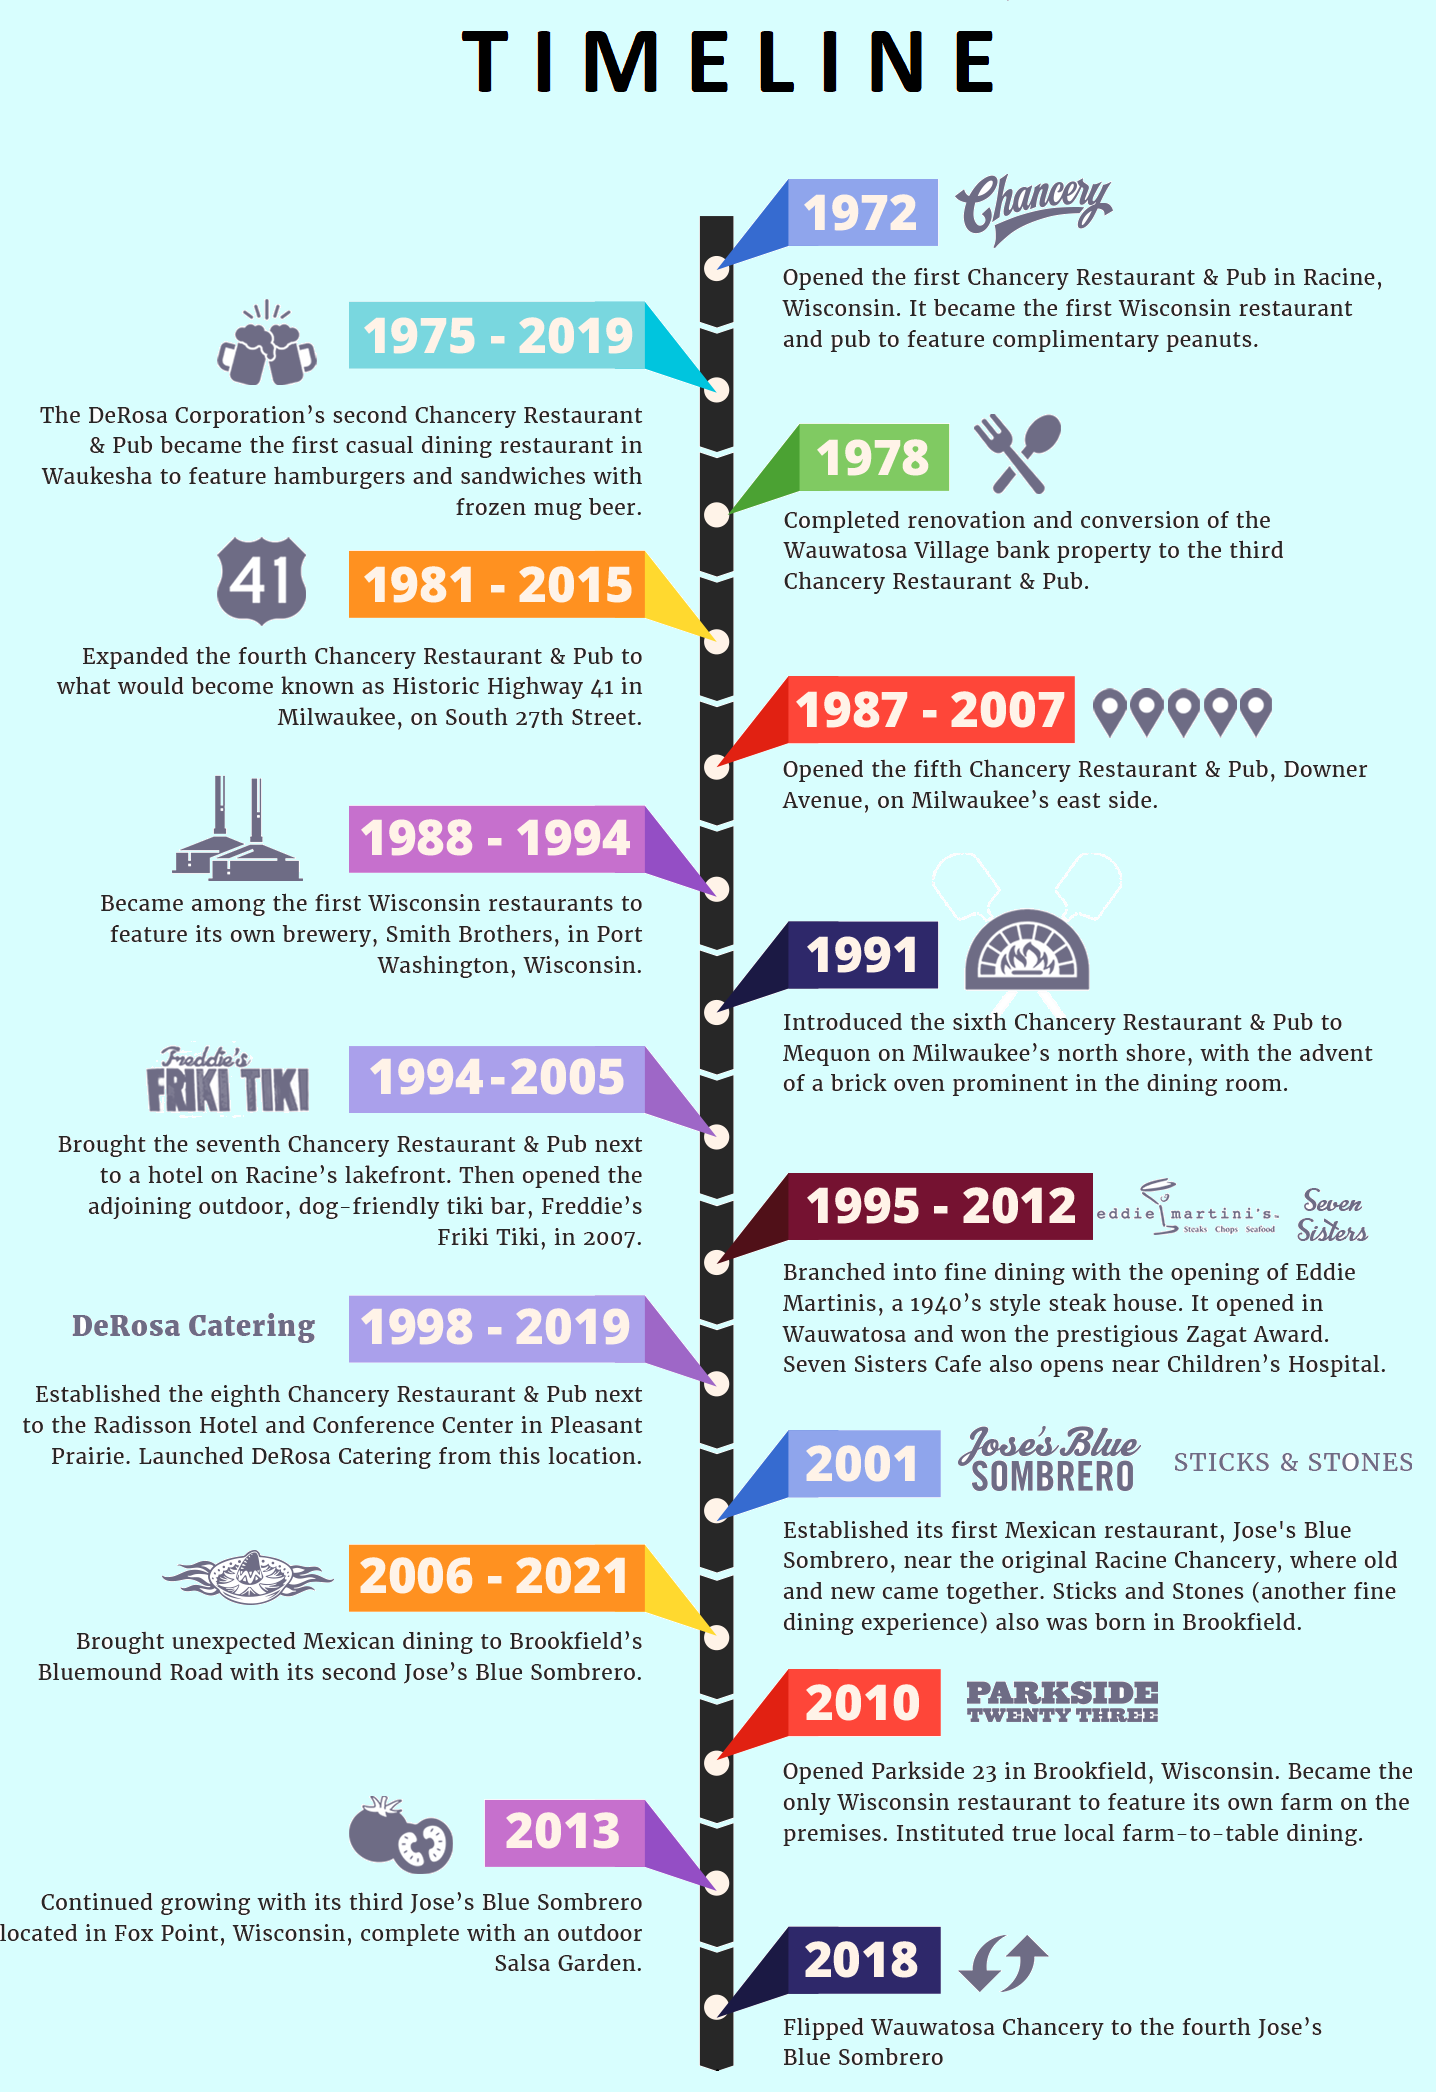 DeRosa Company Timeline